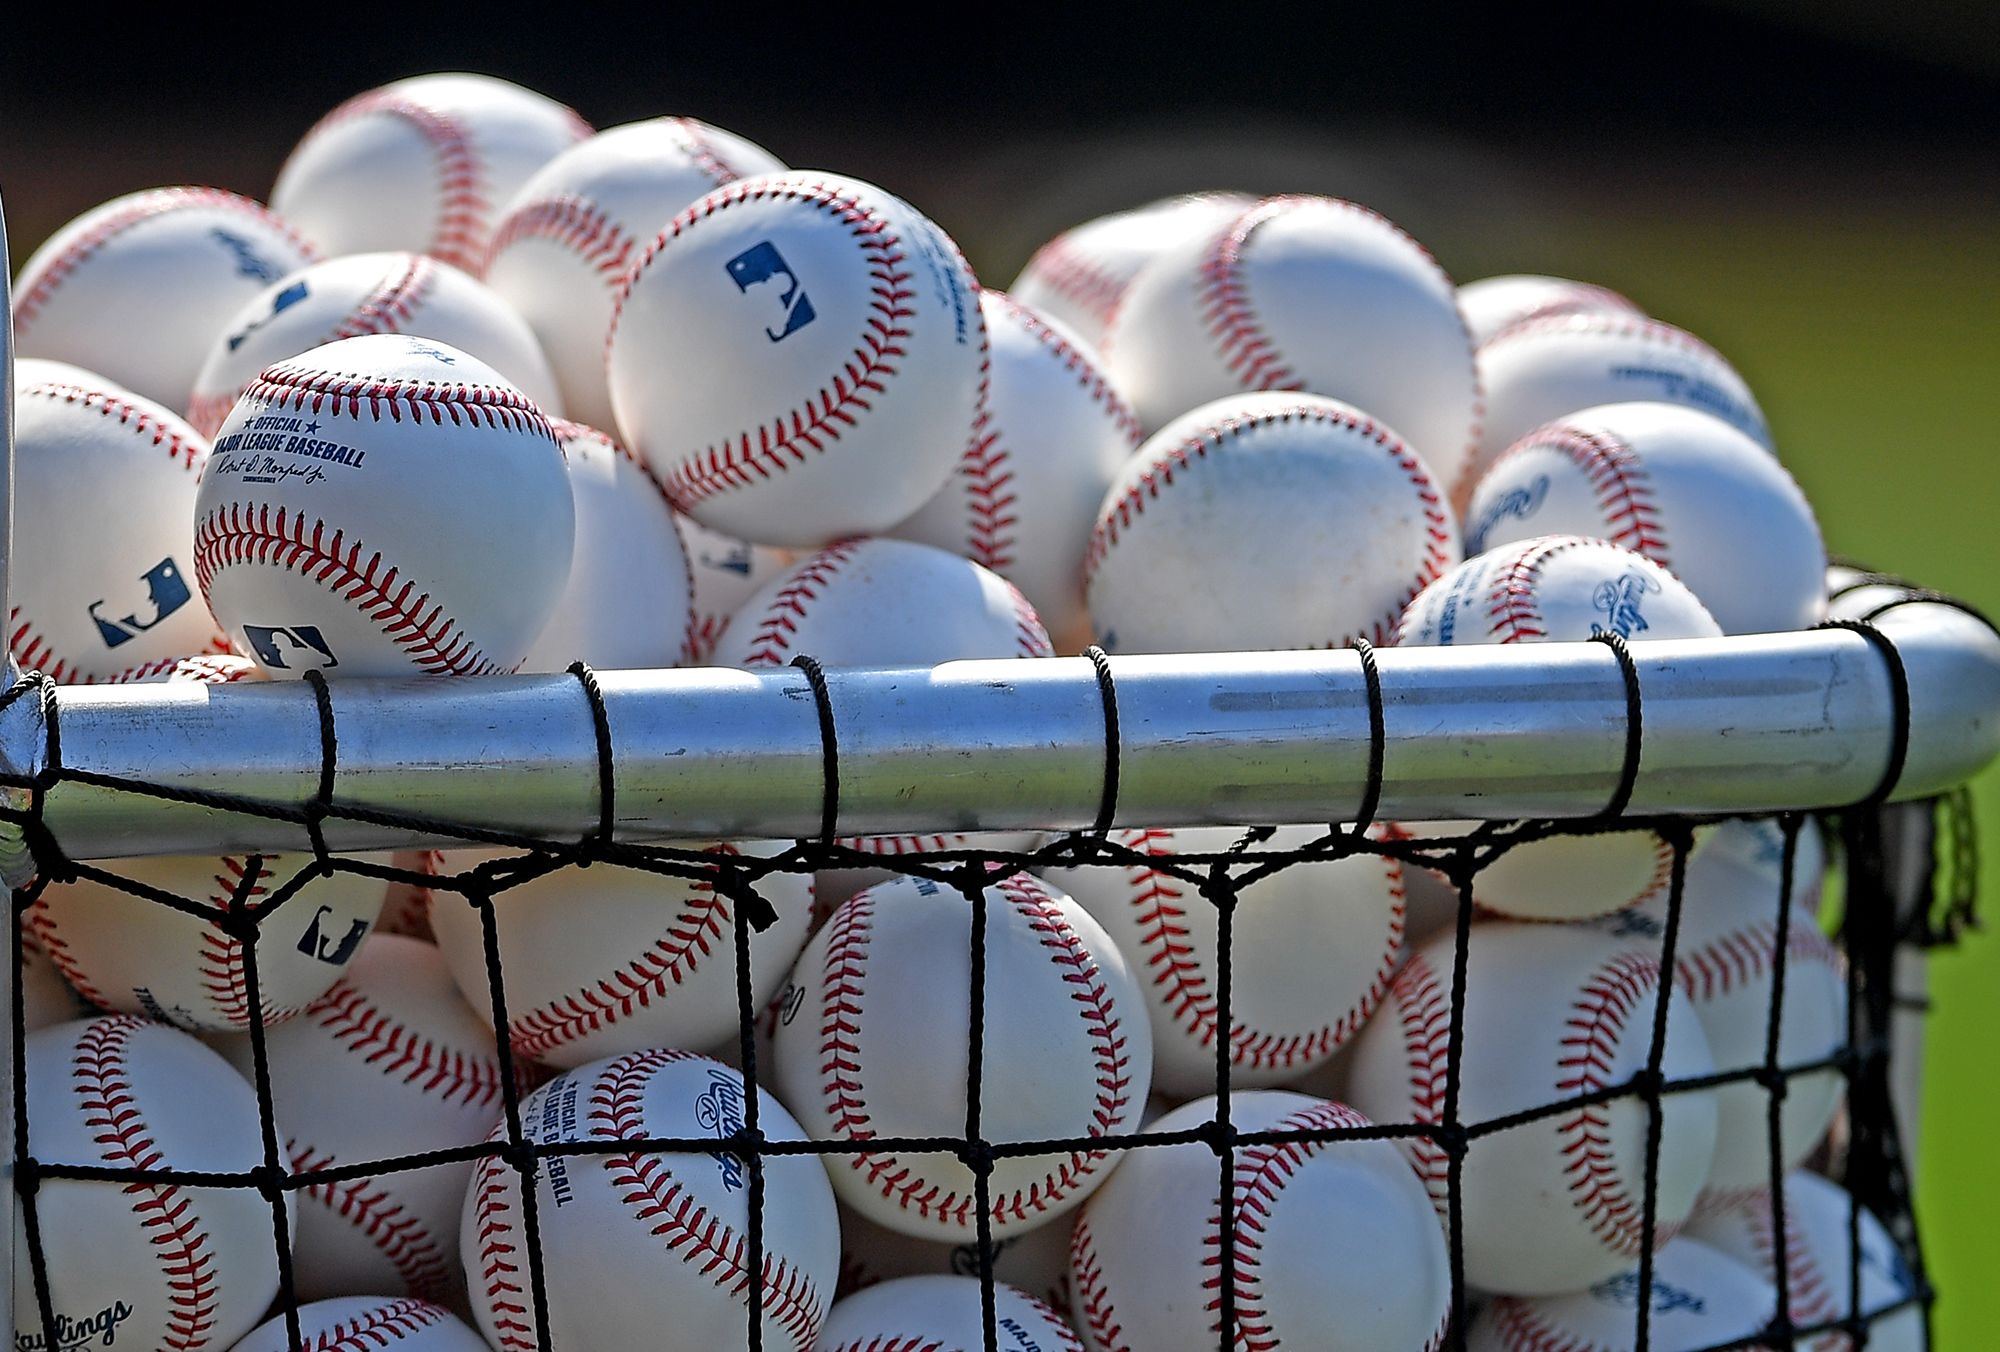 MLB delays spring training, cancels early season games